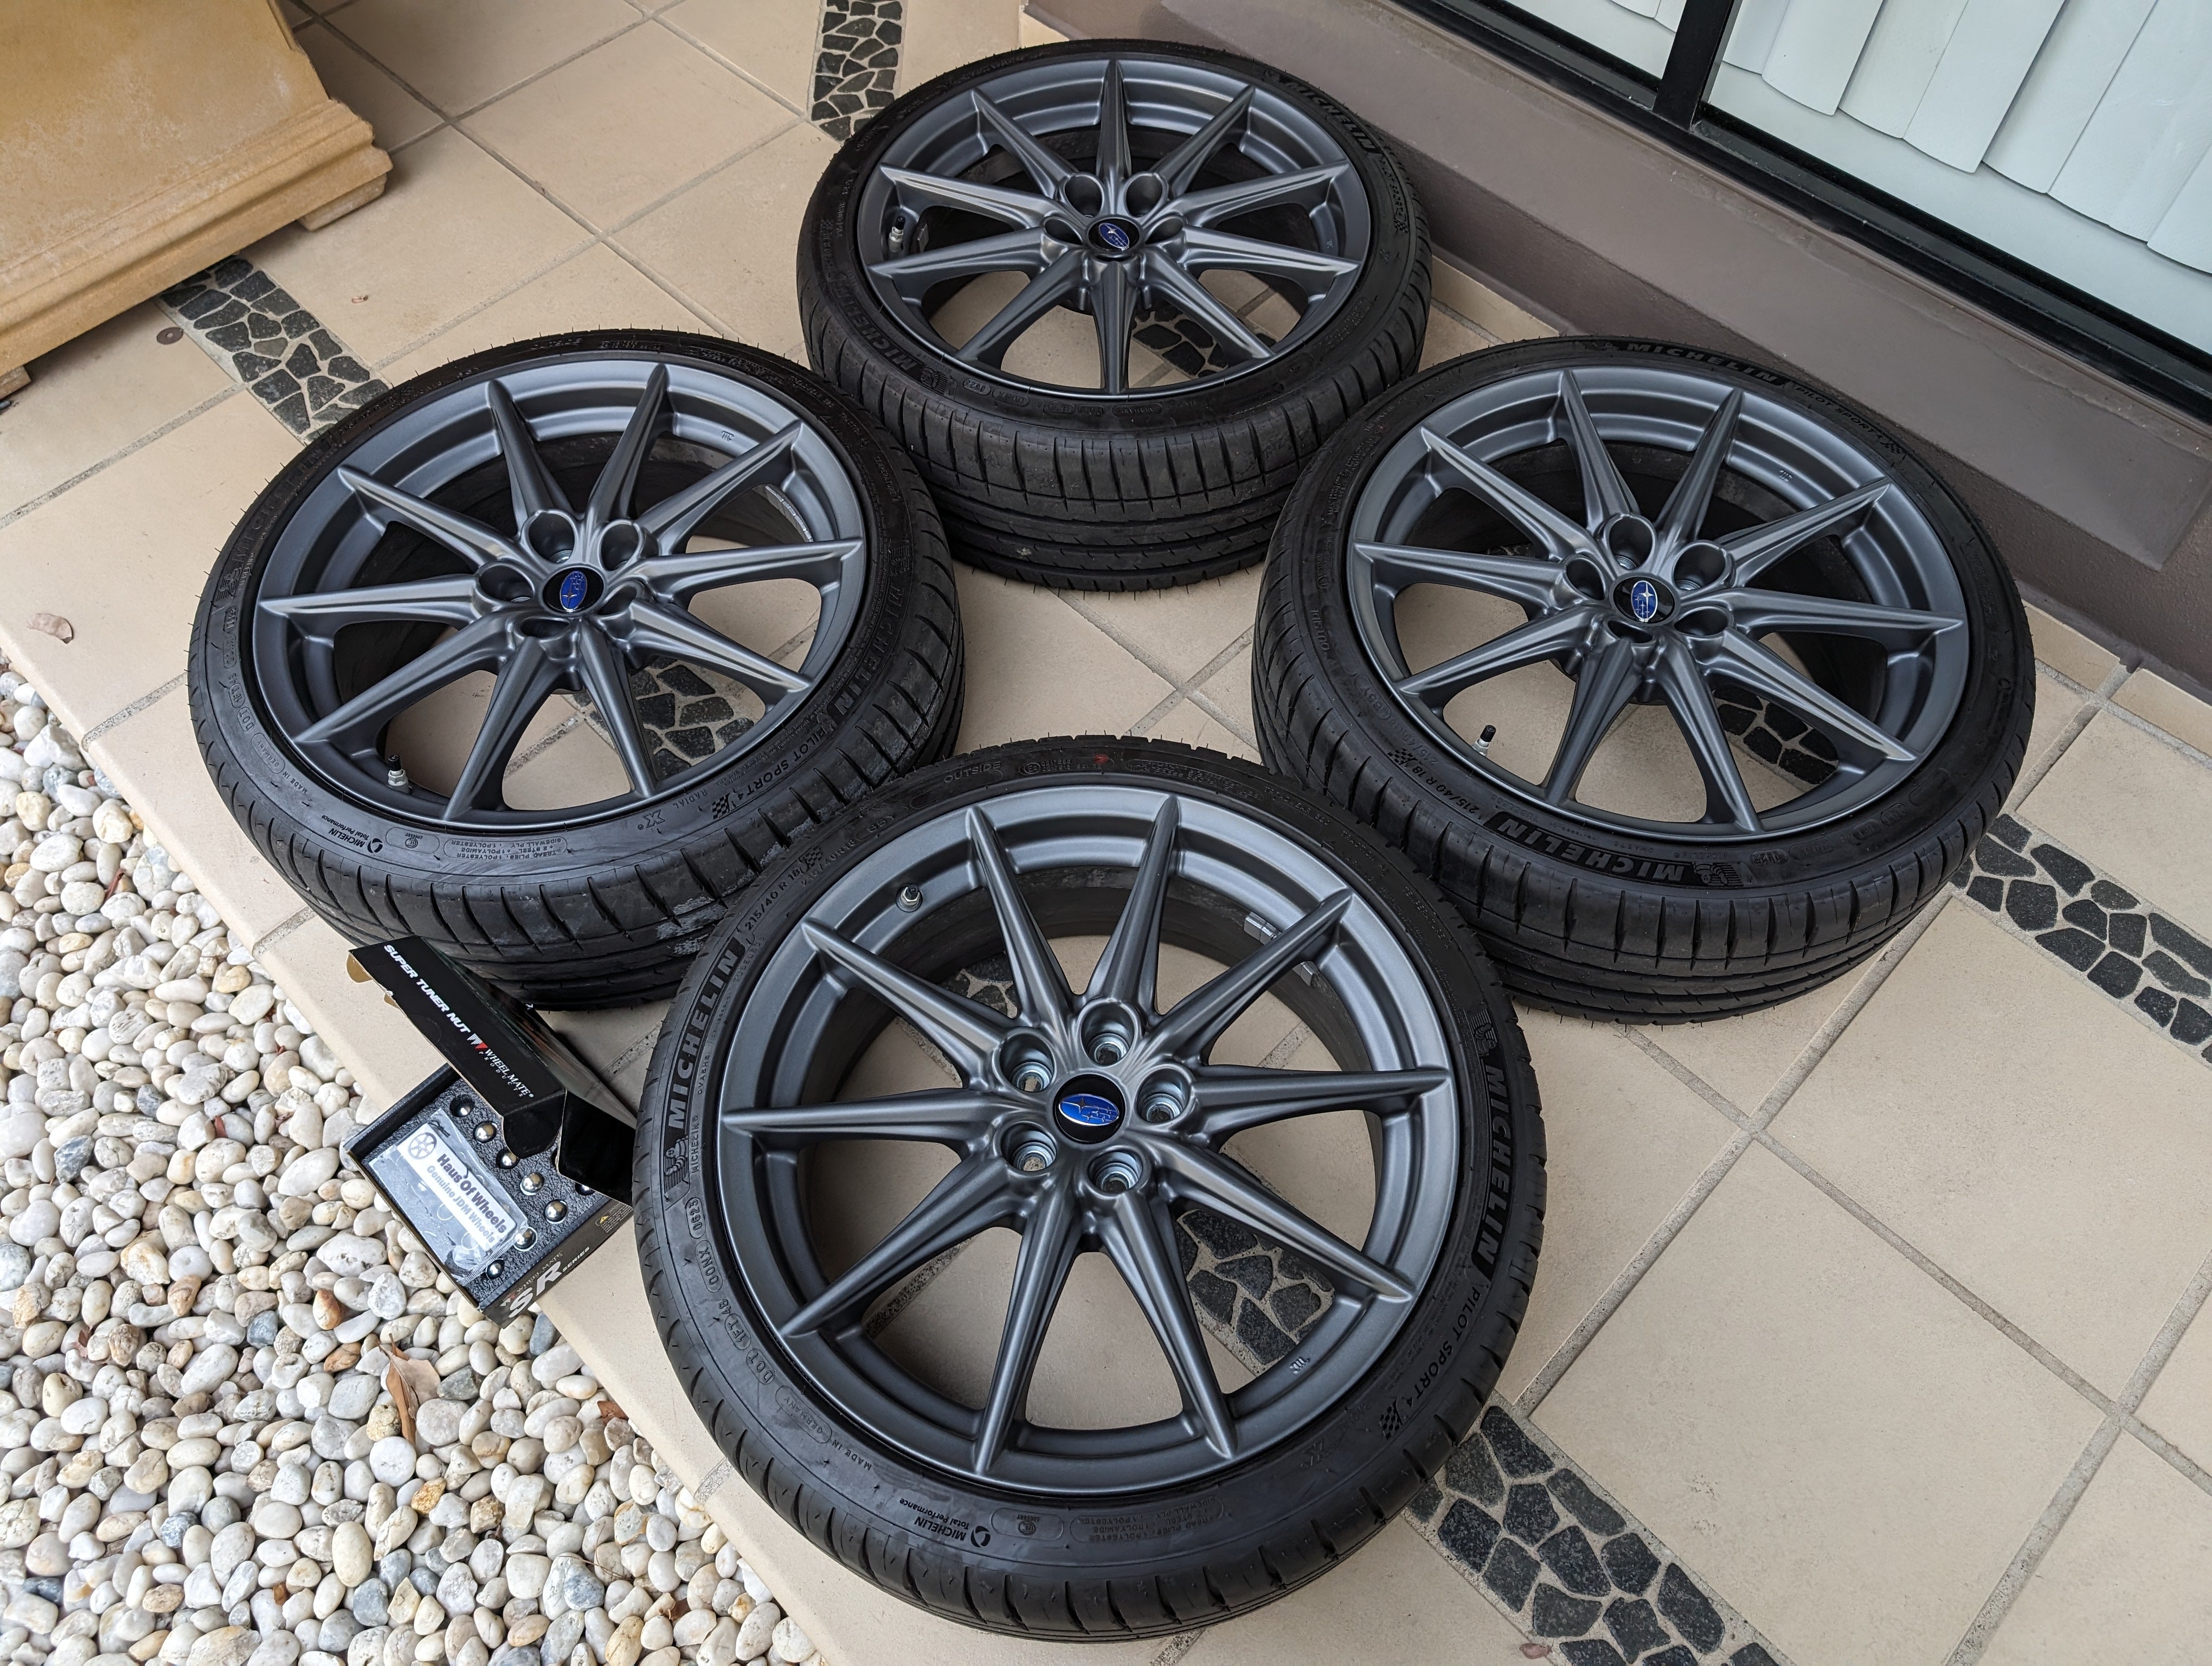 Subaru BRZ S Wheels with Near New Michelin PS4 Tyres and Genuine Subaru Center Caps - 5x100 - 18x7.5 +48